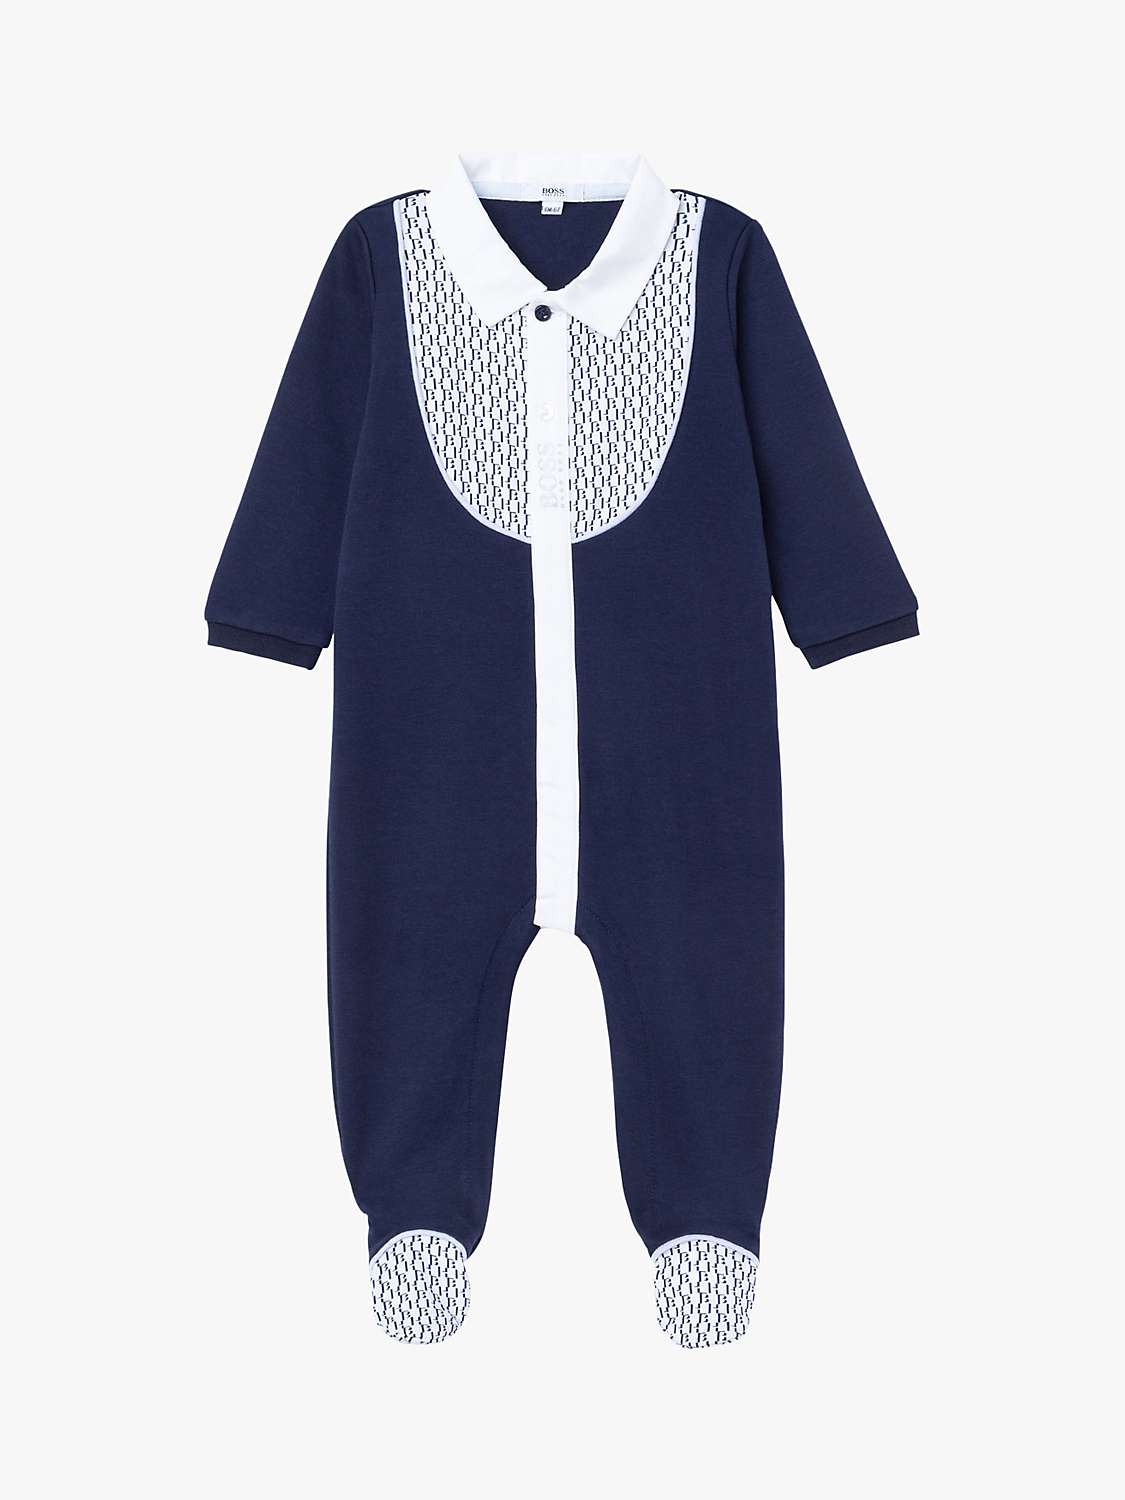 HUGO BOSS Baby Cotton Interlock Pyjamas, Navy at John Lewis & Partners